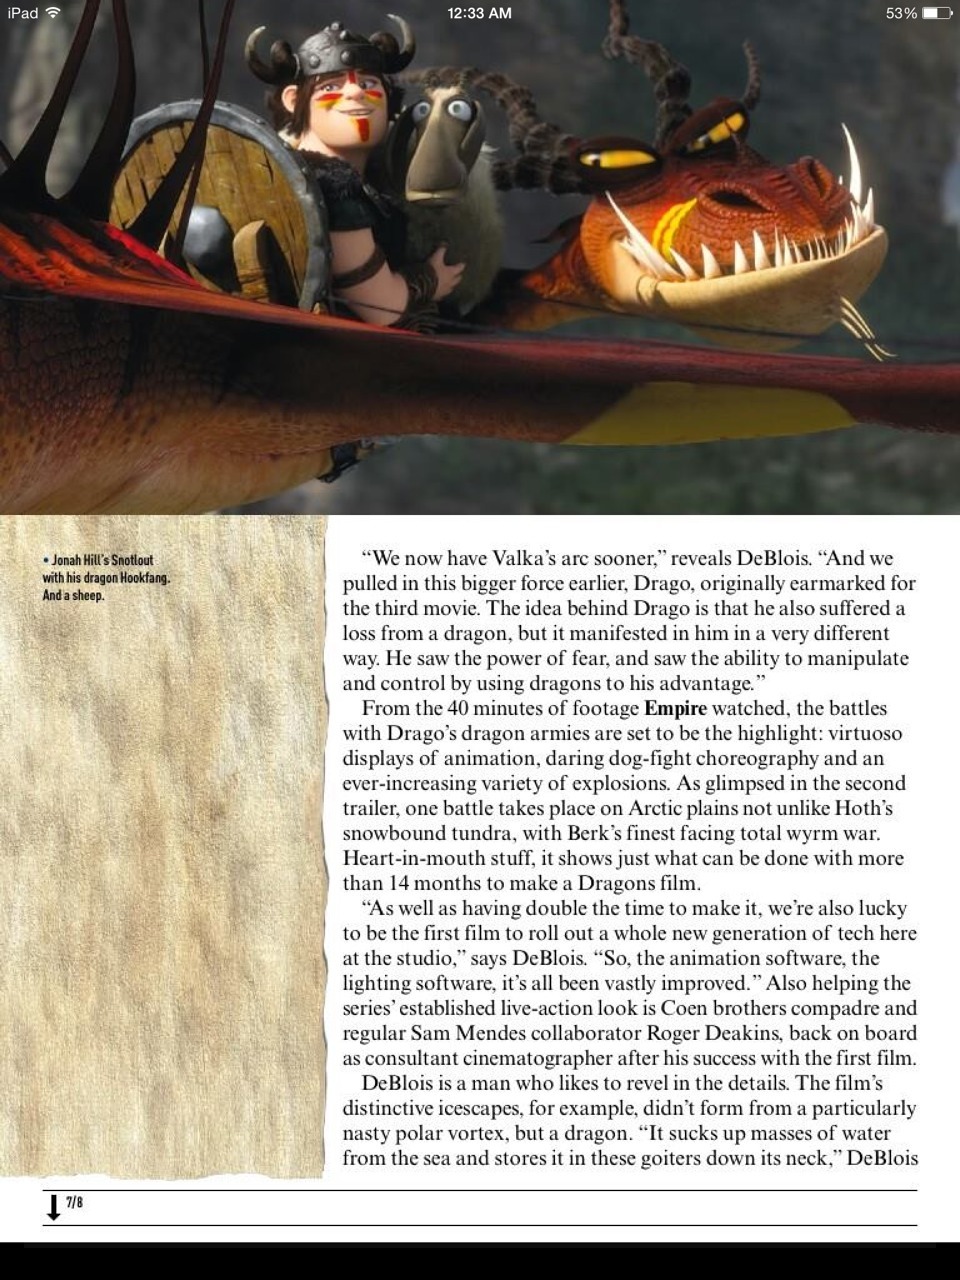 Dragons 2 [spoilers présents] DreamWorks (2014) - Page 3 Tumblr_n4voz1a7YU1sjn6zlo8_1280